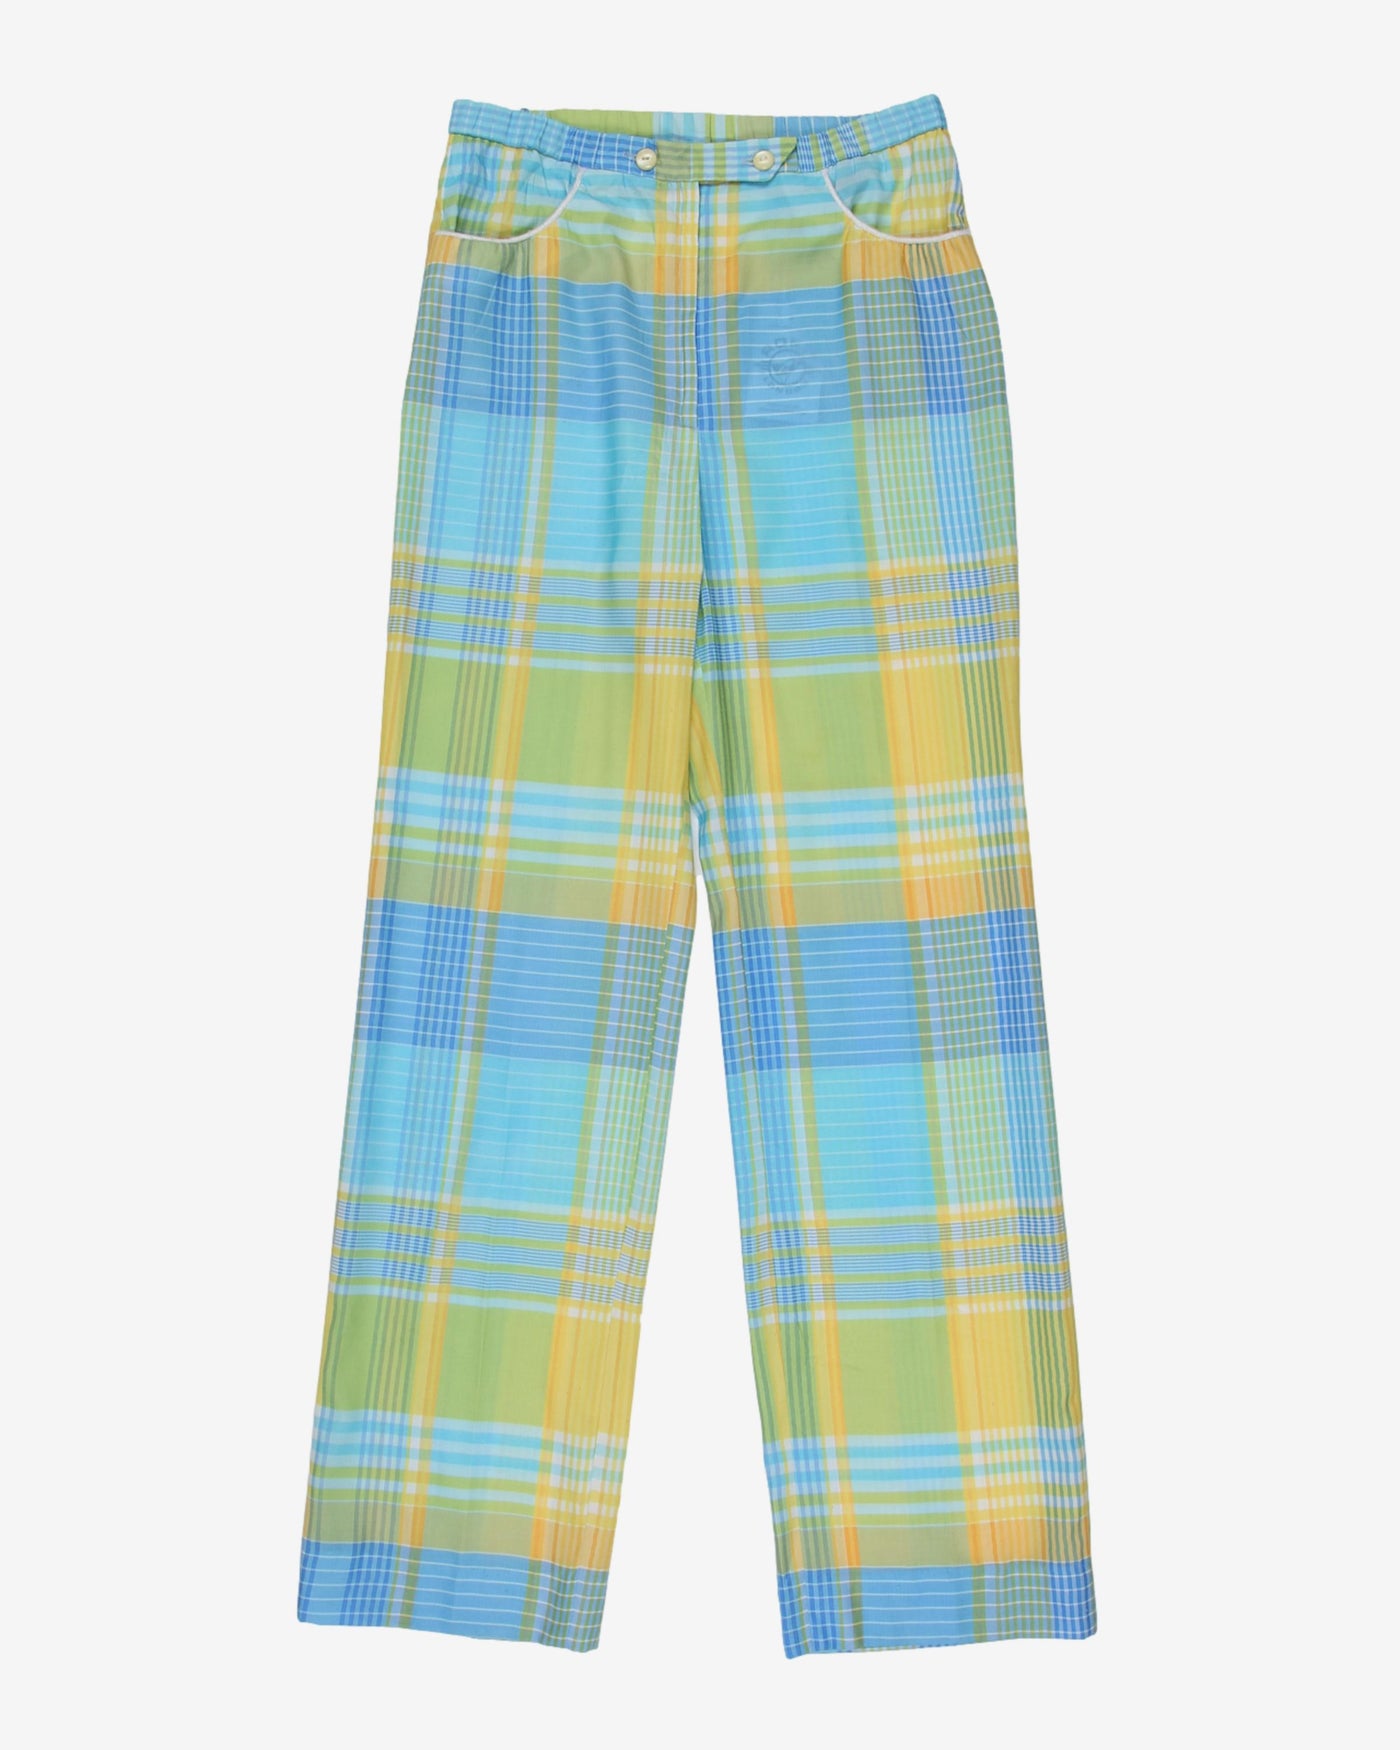 Di Fini Vintage 70s Blue Yellow Plaid Straight Trousers - W29 L31